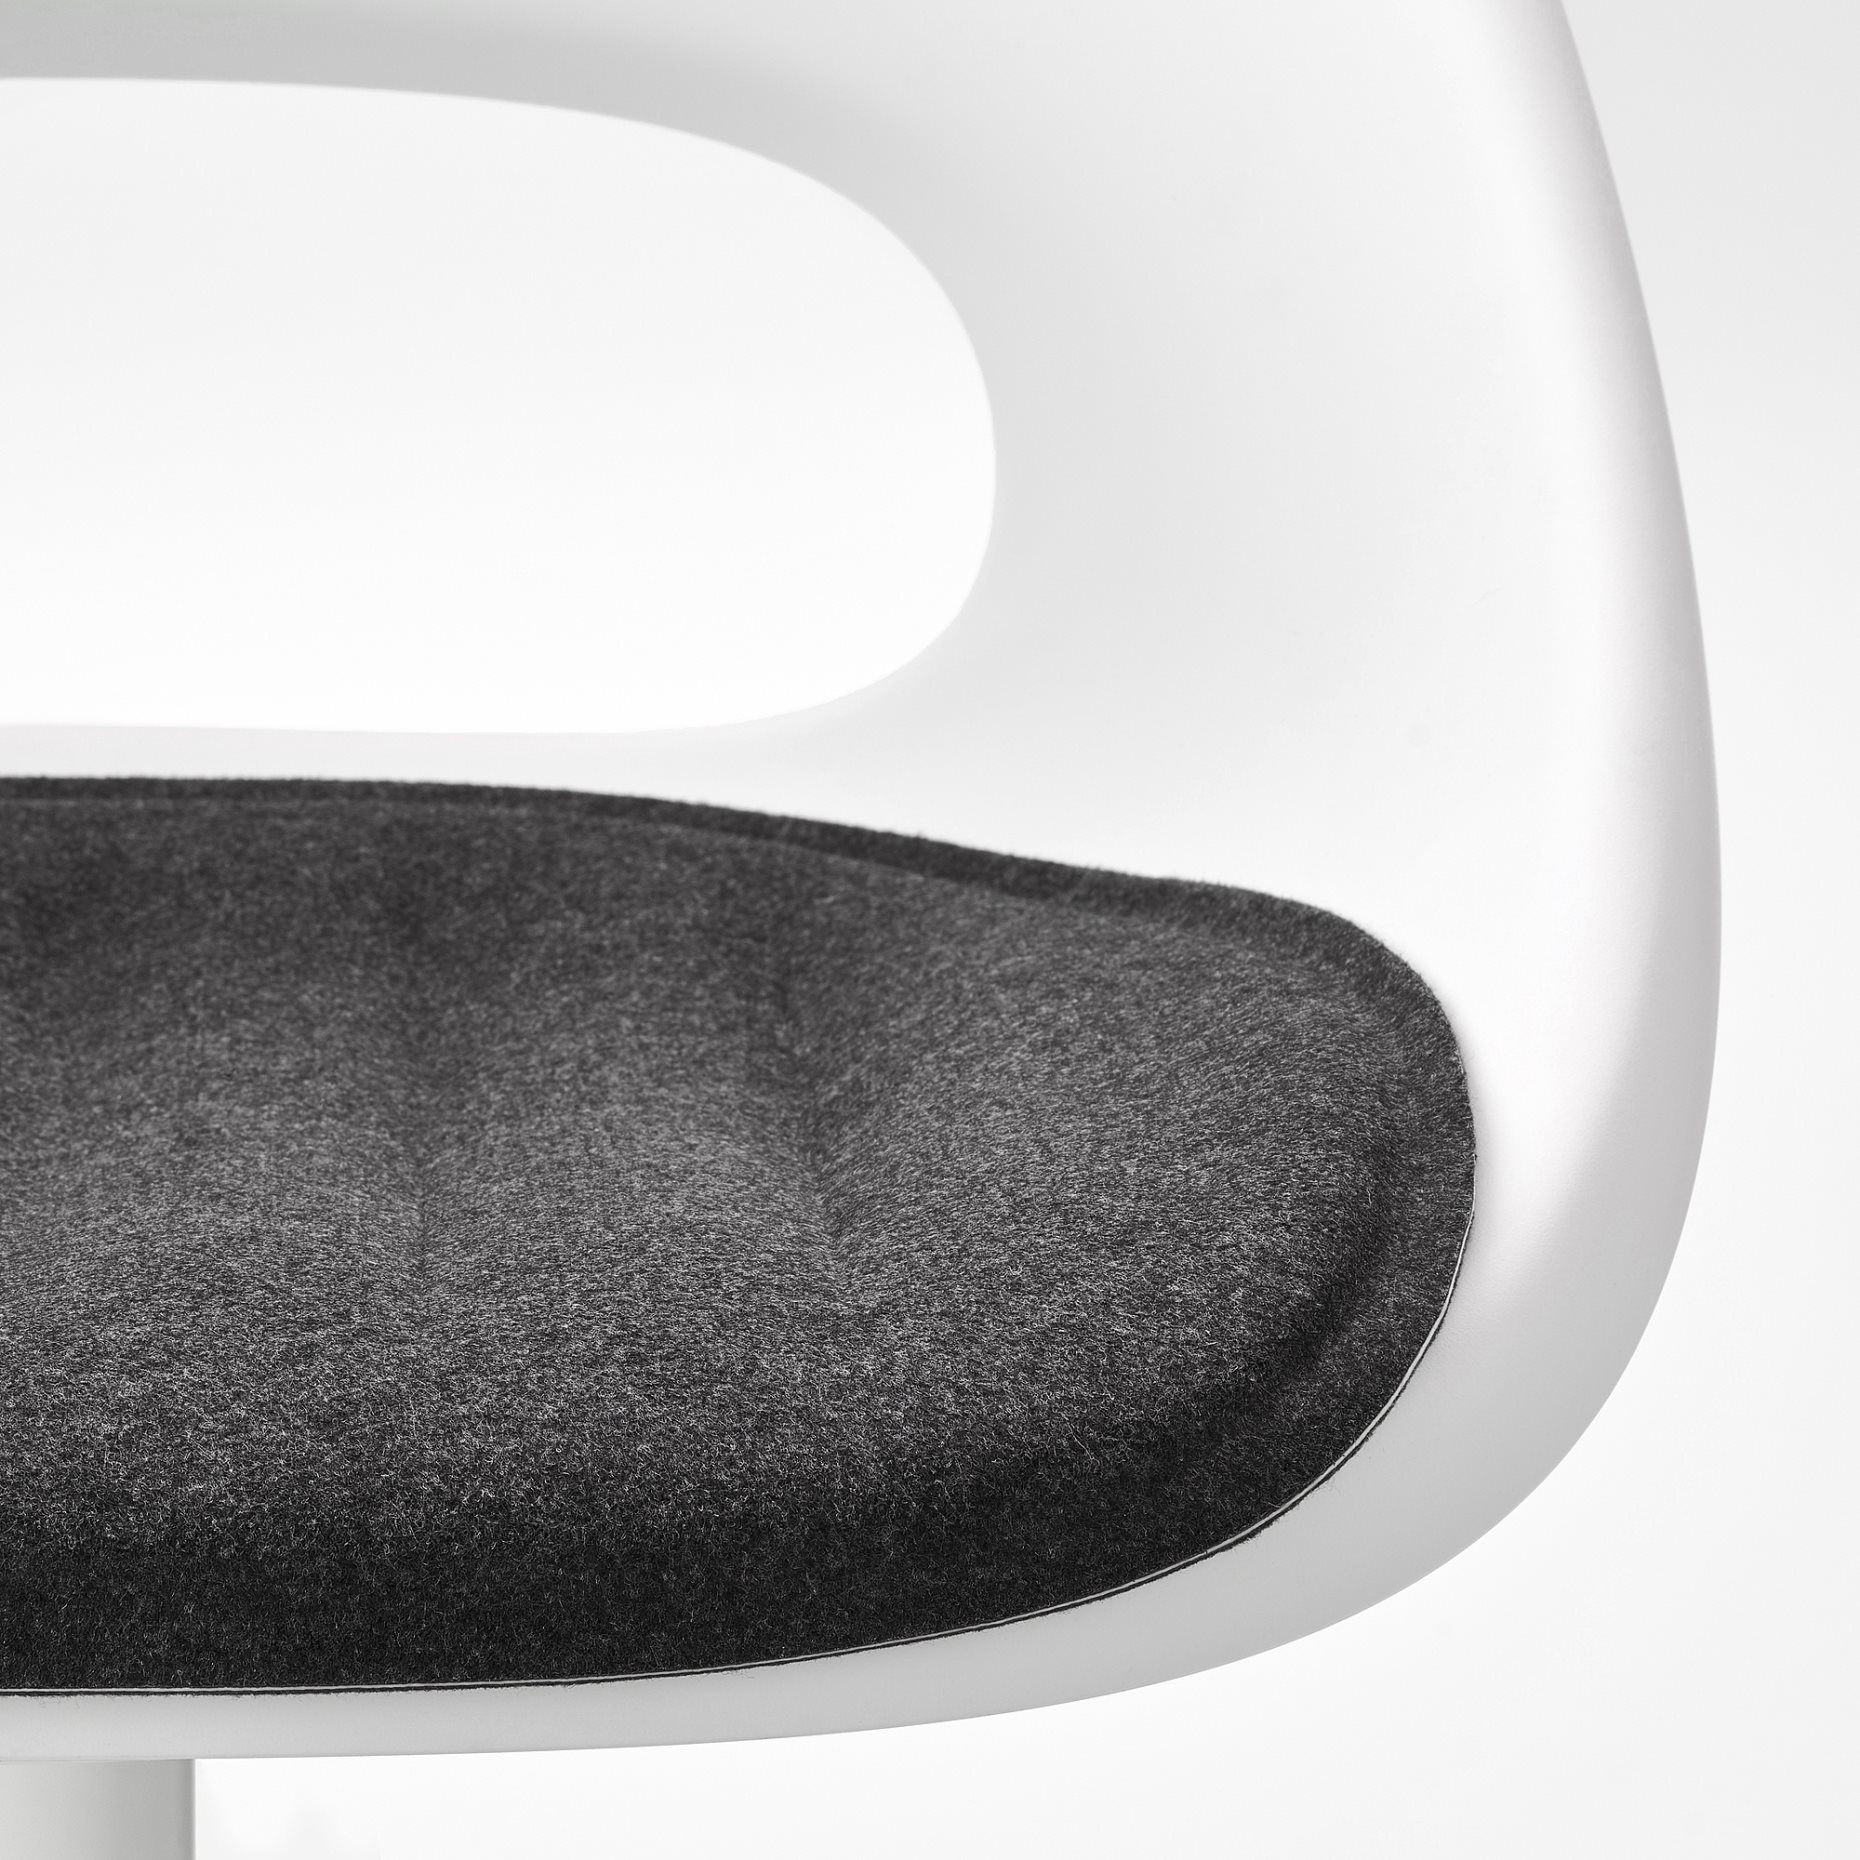 LOBERGET/MALSKAR, swivel chair with pad, 994.454.51